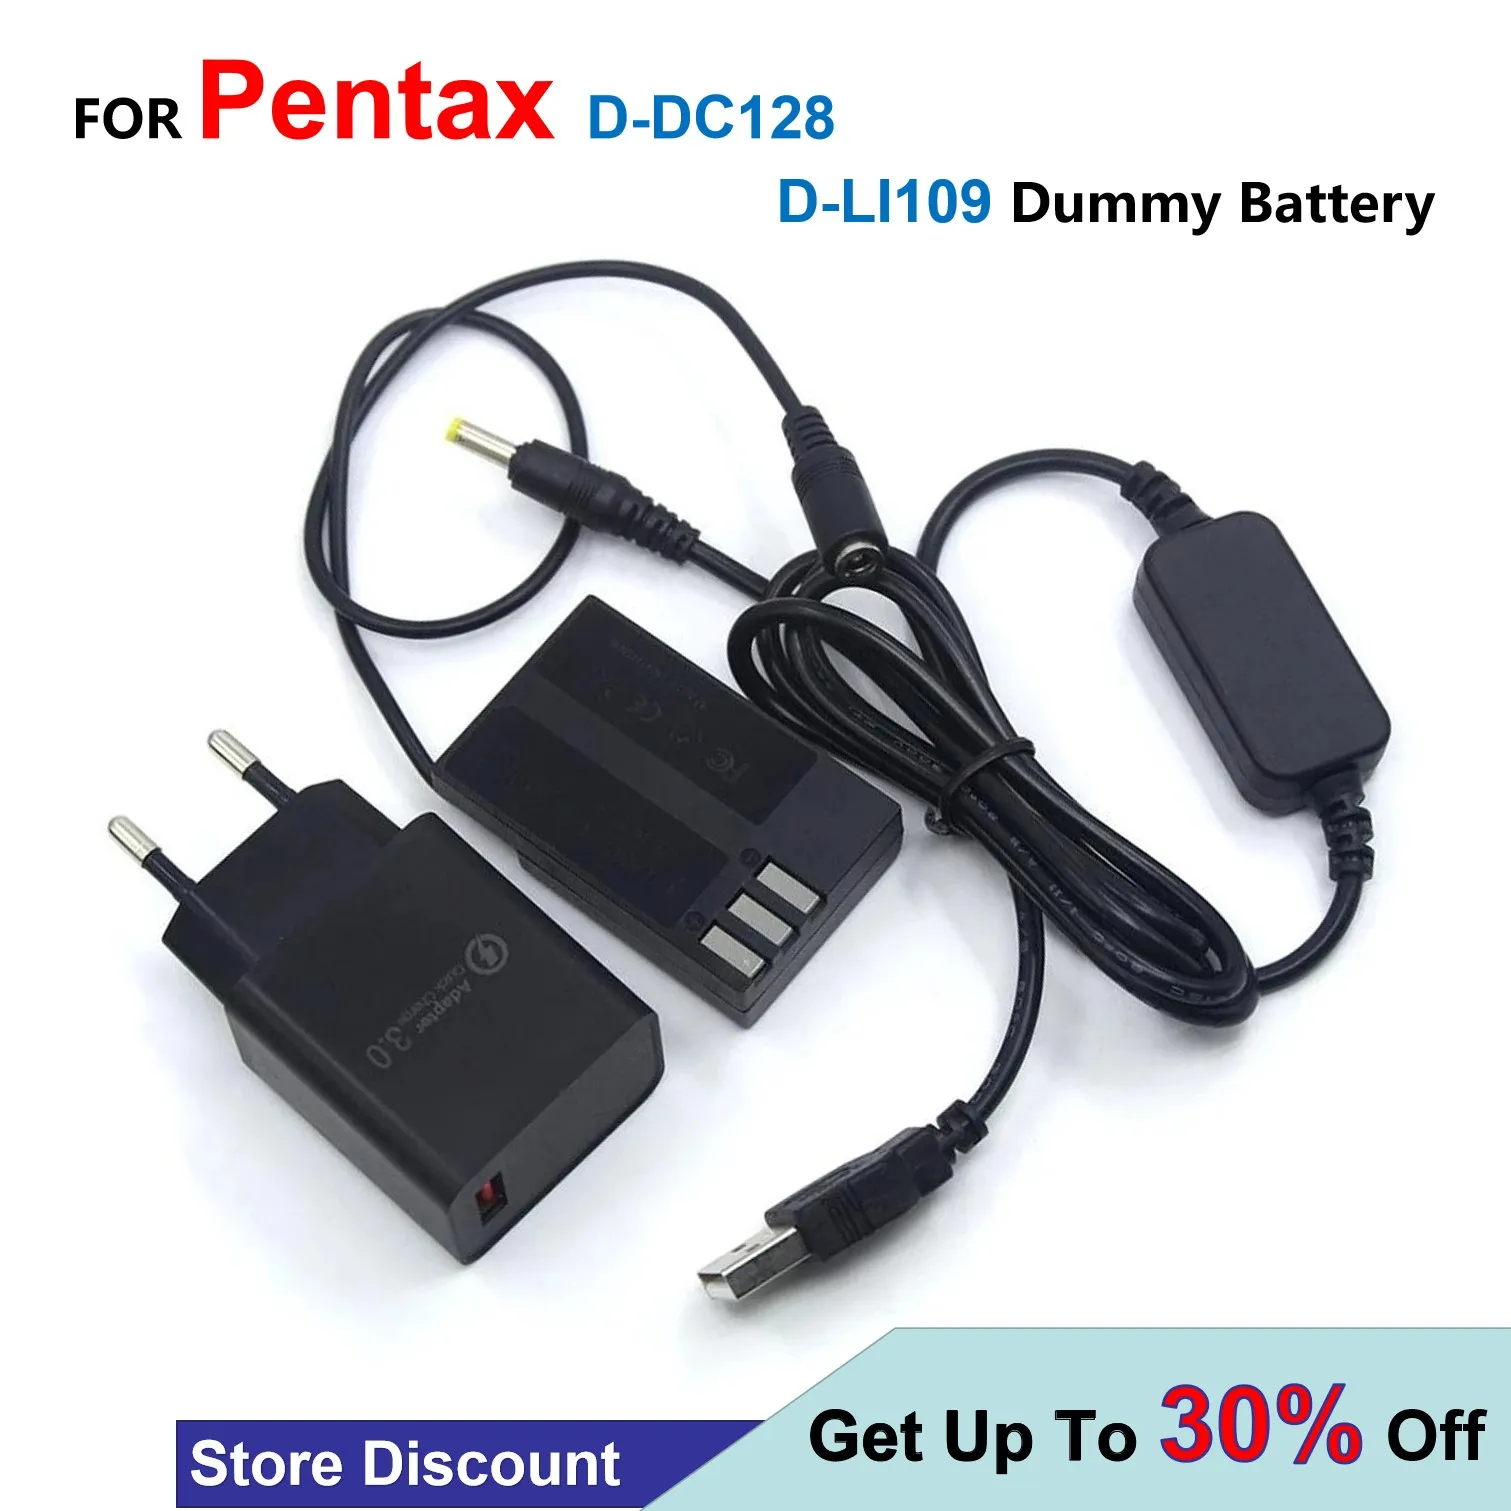 

D-DC128 DC Coupler D-LI109 Dummy Battery+QC3.0 USB Charger+USB Cable Fit Power Bank For Pentax K-70 K-50 K-30 K-R K-2 K-S1 K-S2